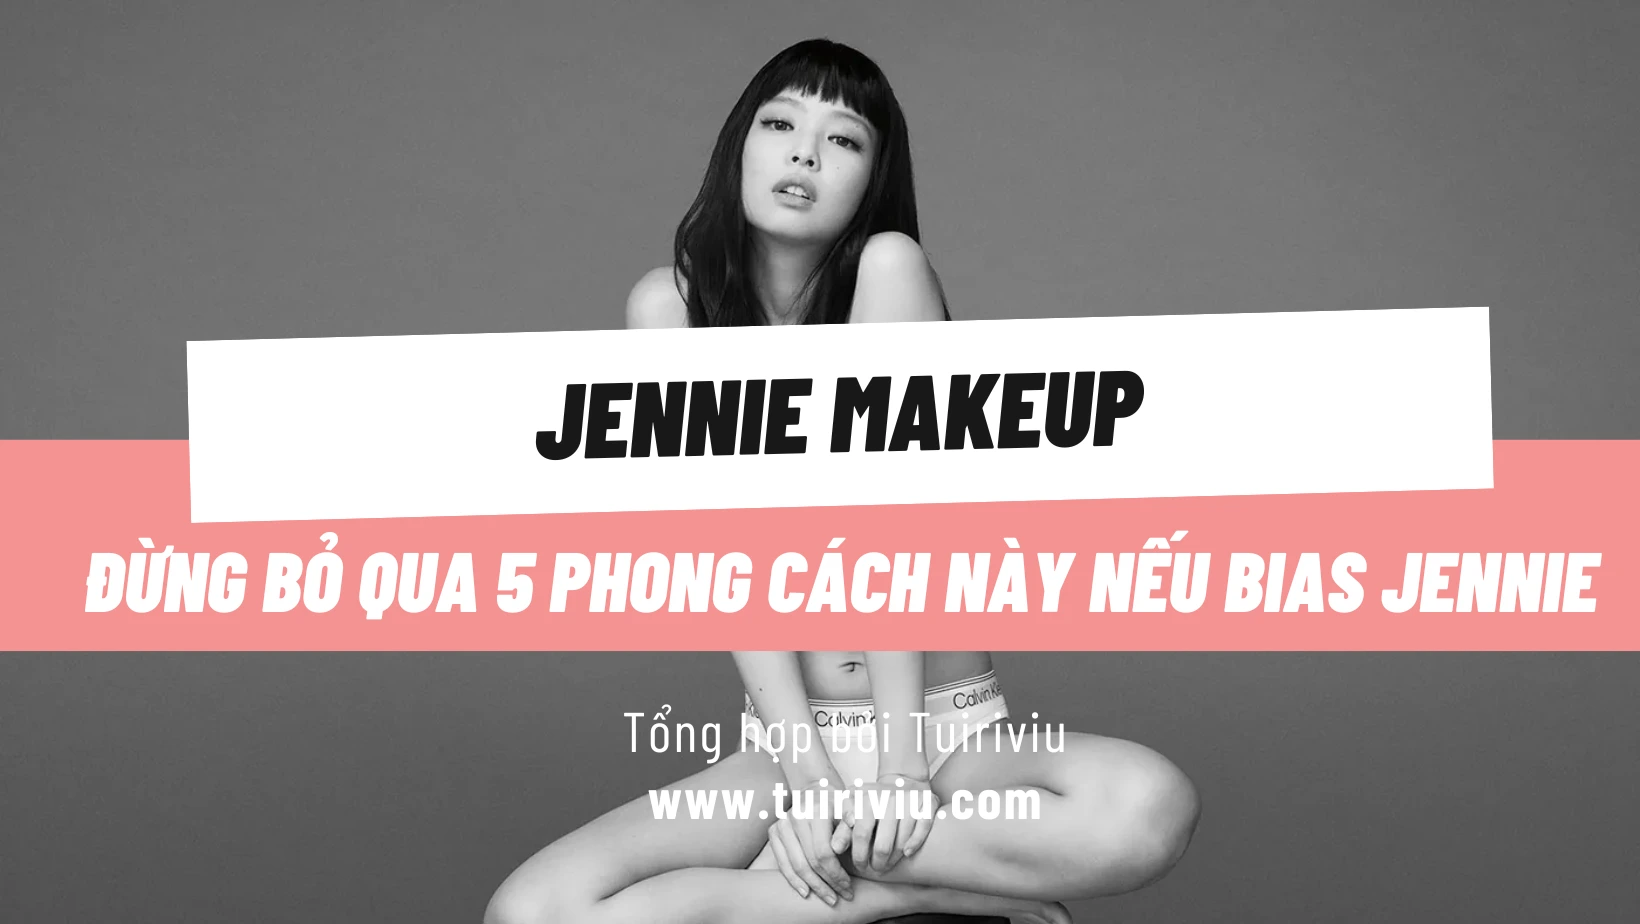 5 kiểu Jennie Makeup – Cách để xinh như Jennie bao dễ!